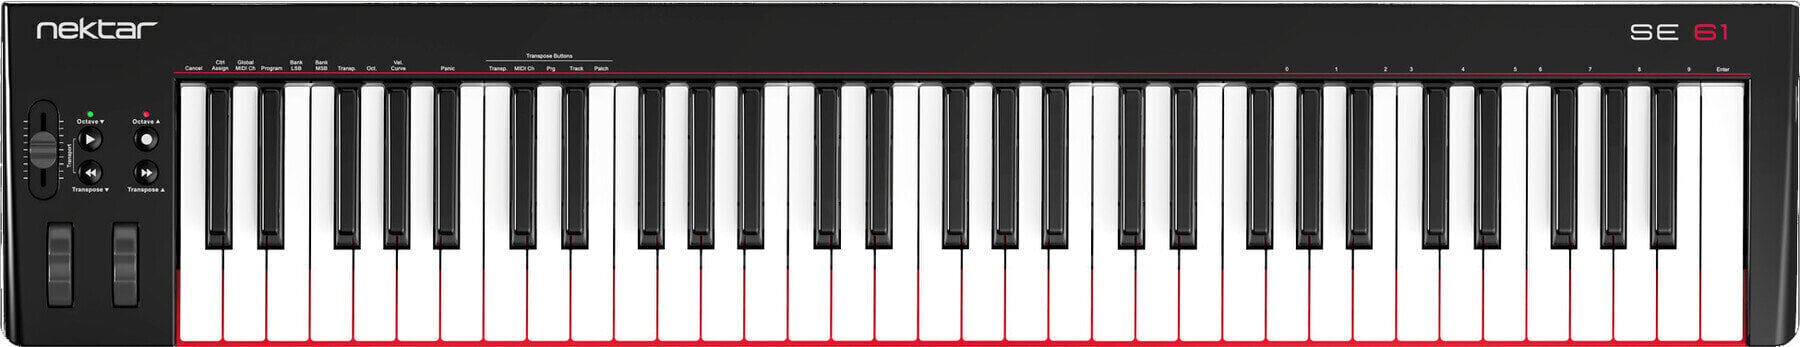 MIDI keyboard Nektar SE61